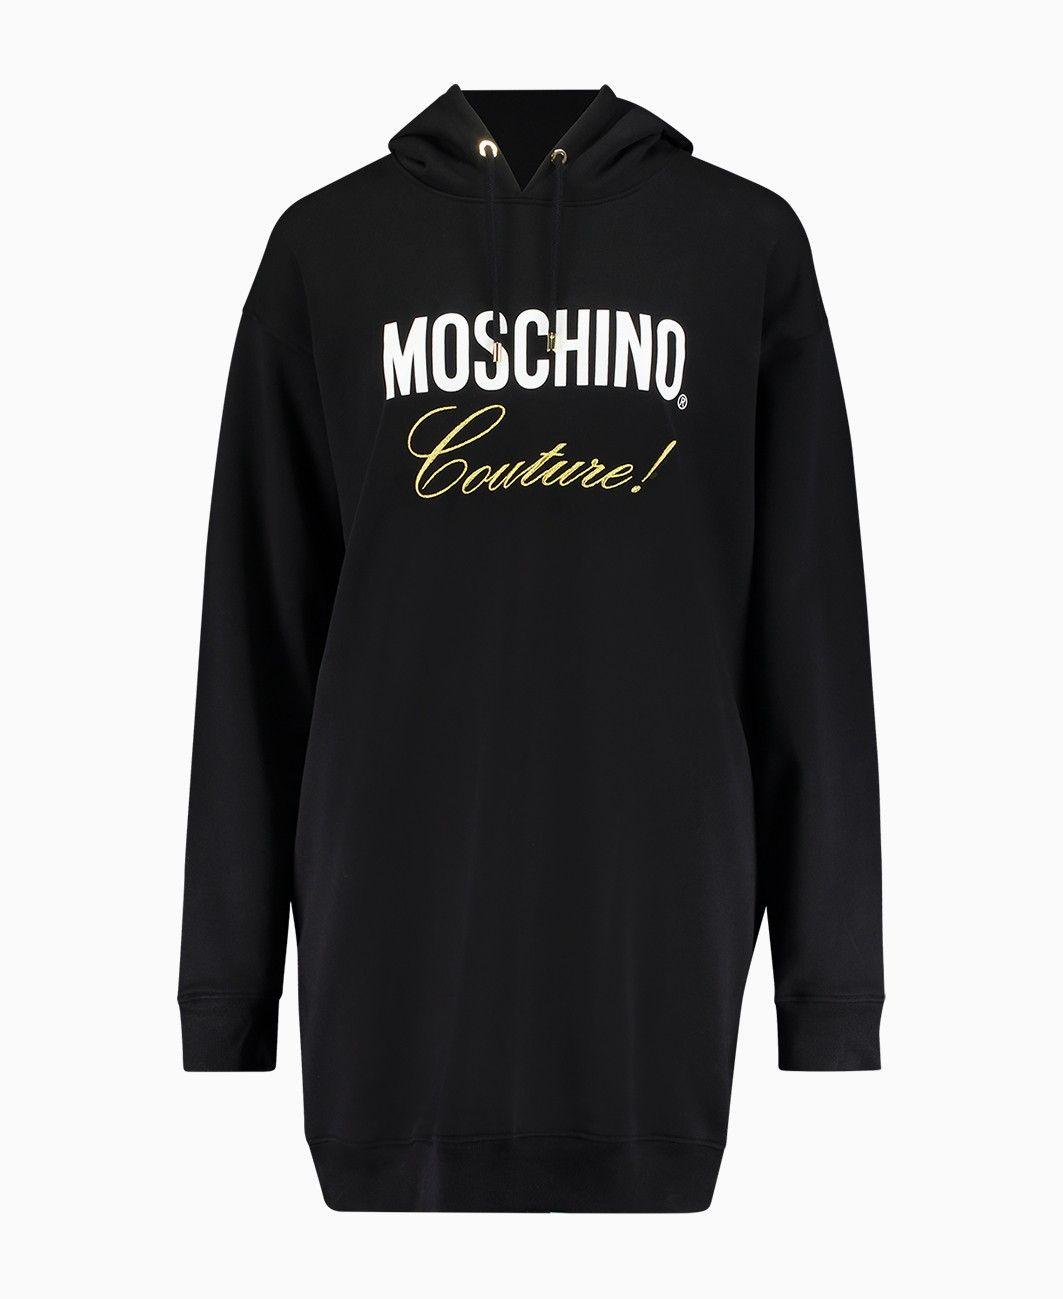 Moschino Couture Logo - Moschino - Couture! Logo Sweater Dress - Black